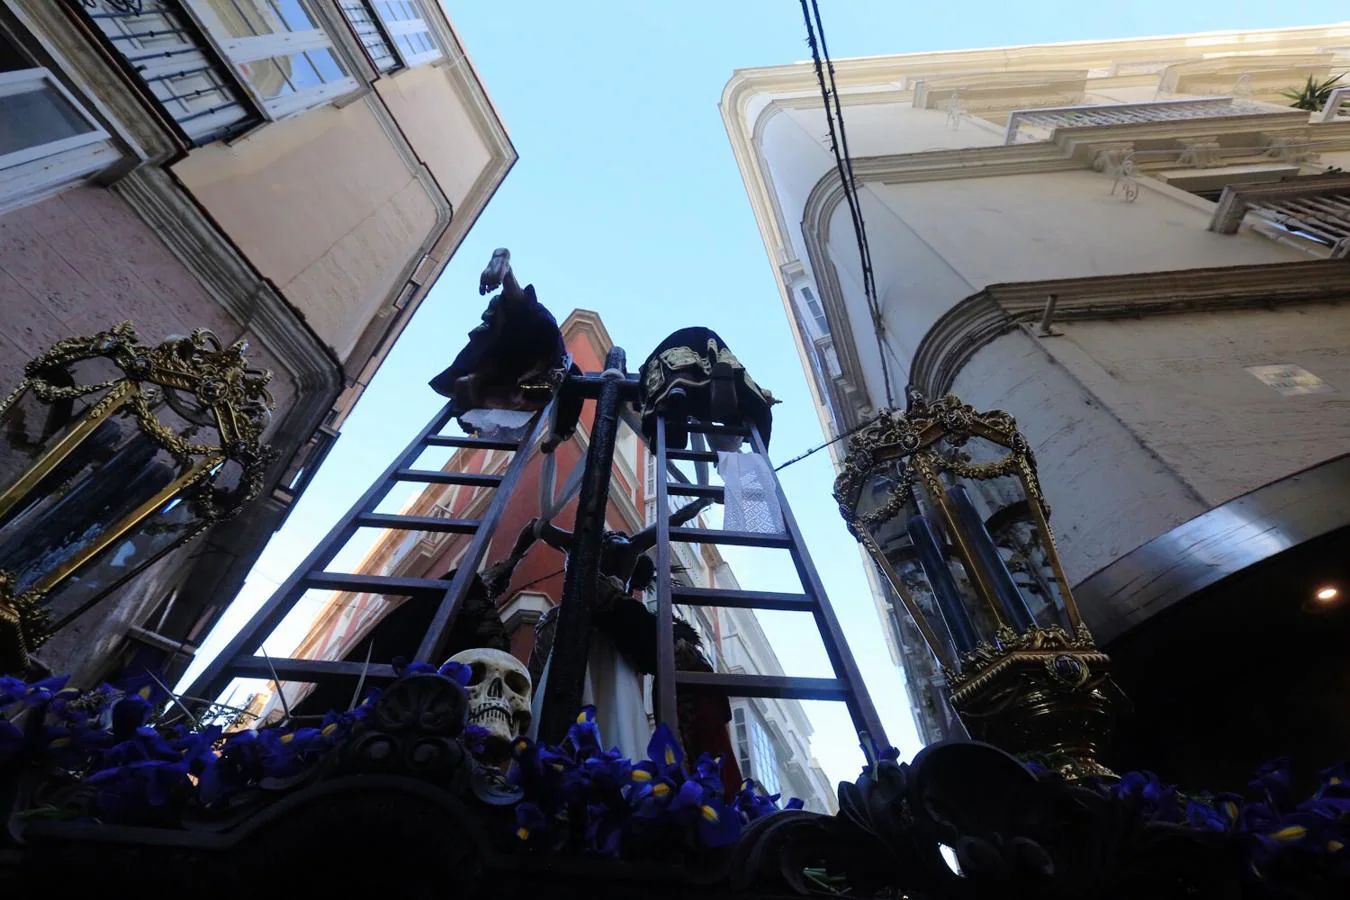 FOTOS: Descendimiento en la Semana Santa de Cádiz